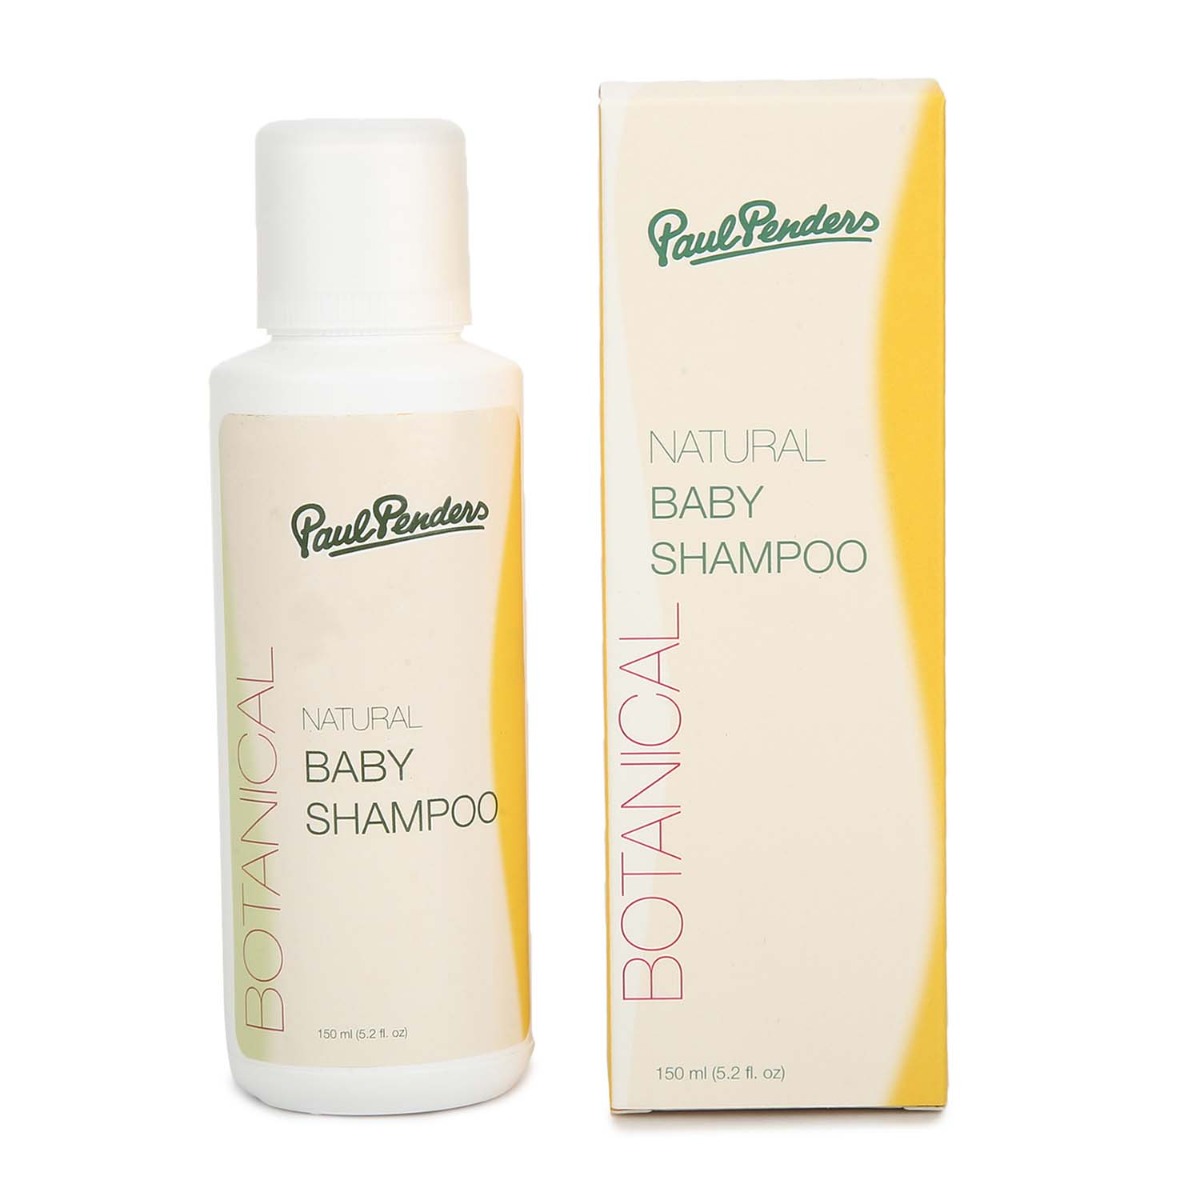 Paul Penders Natural Baby Shampoo, 150ml